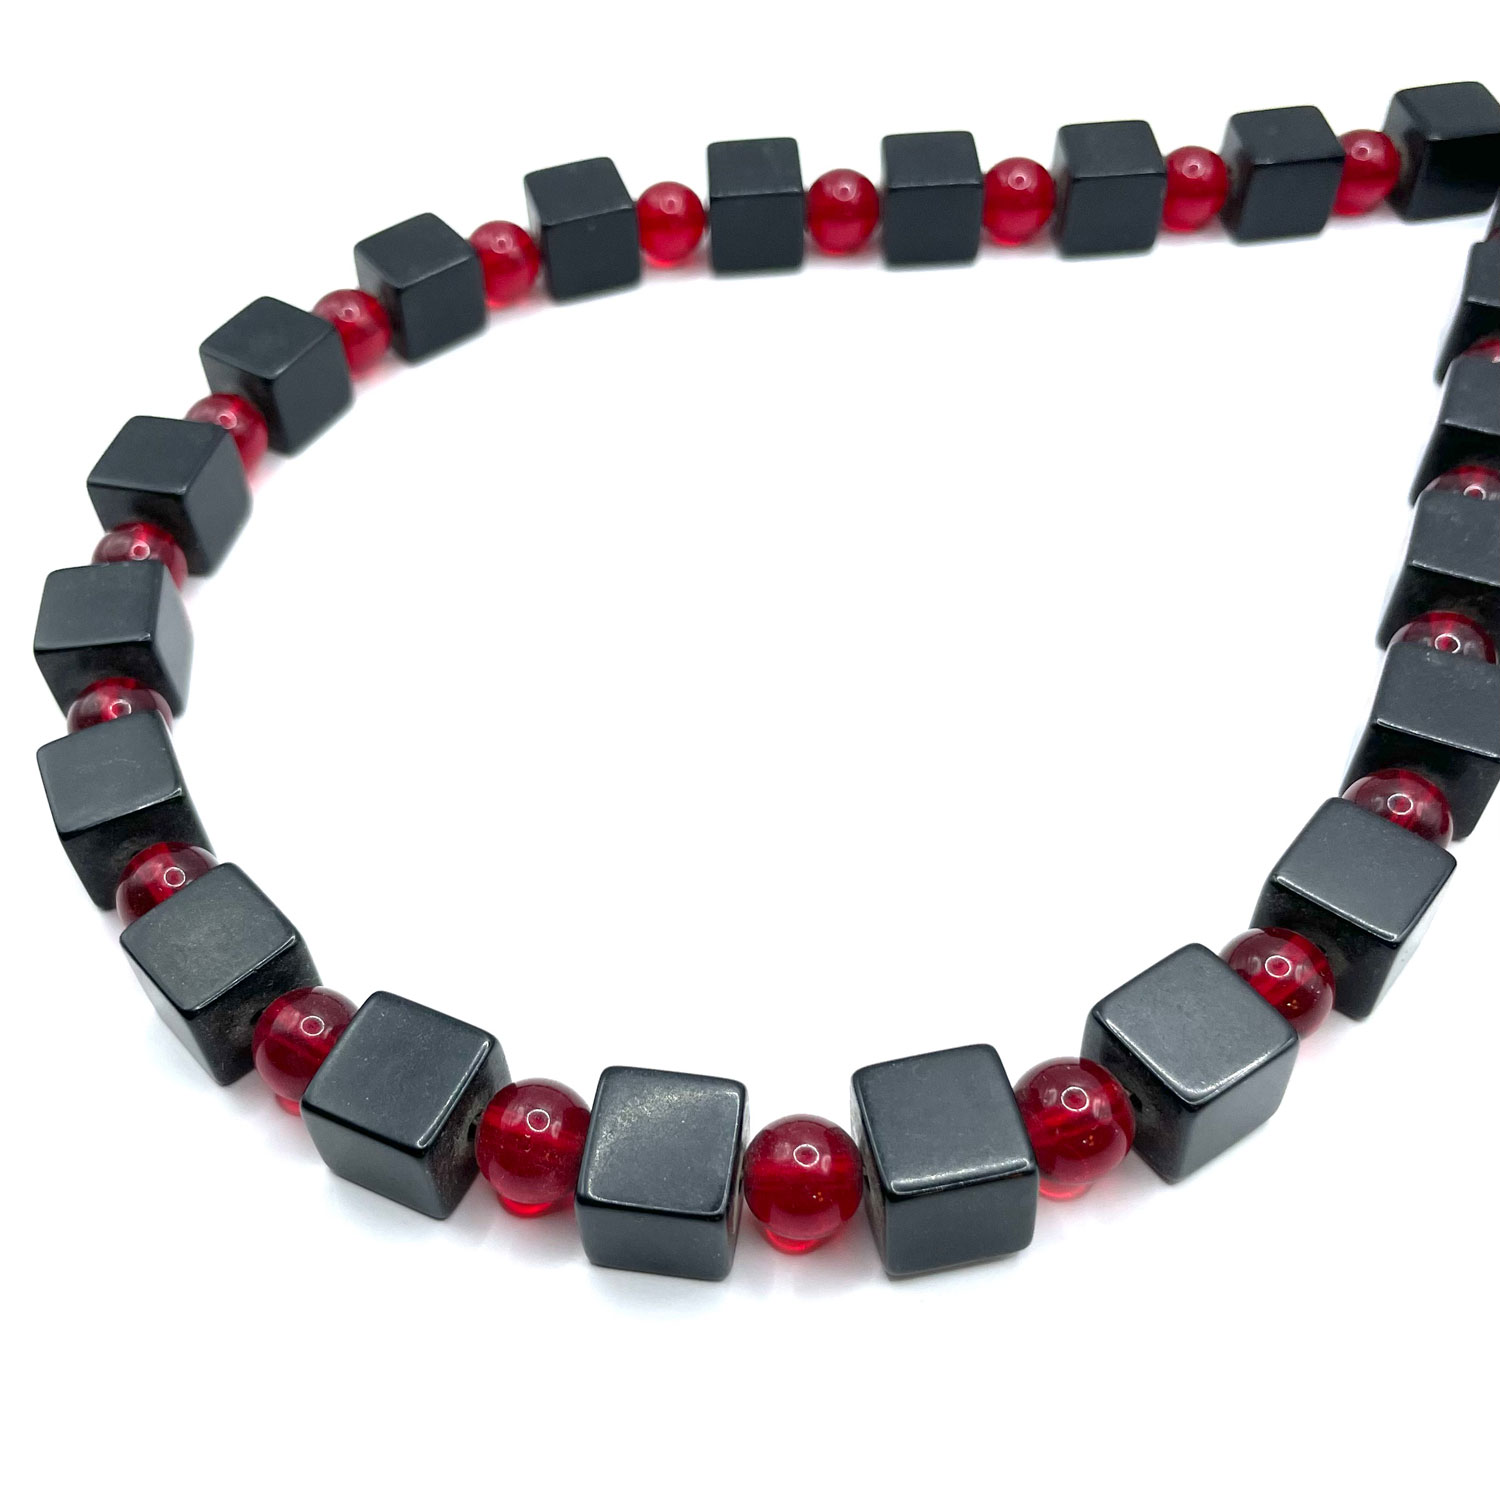 Bakelite cube necklace